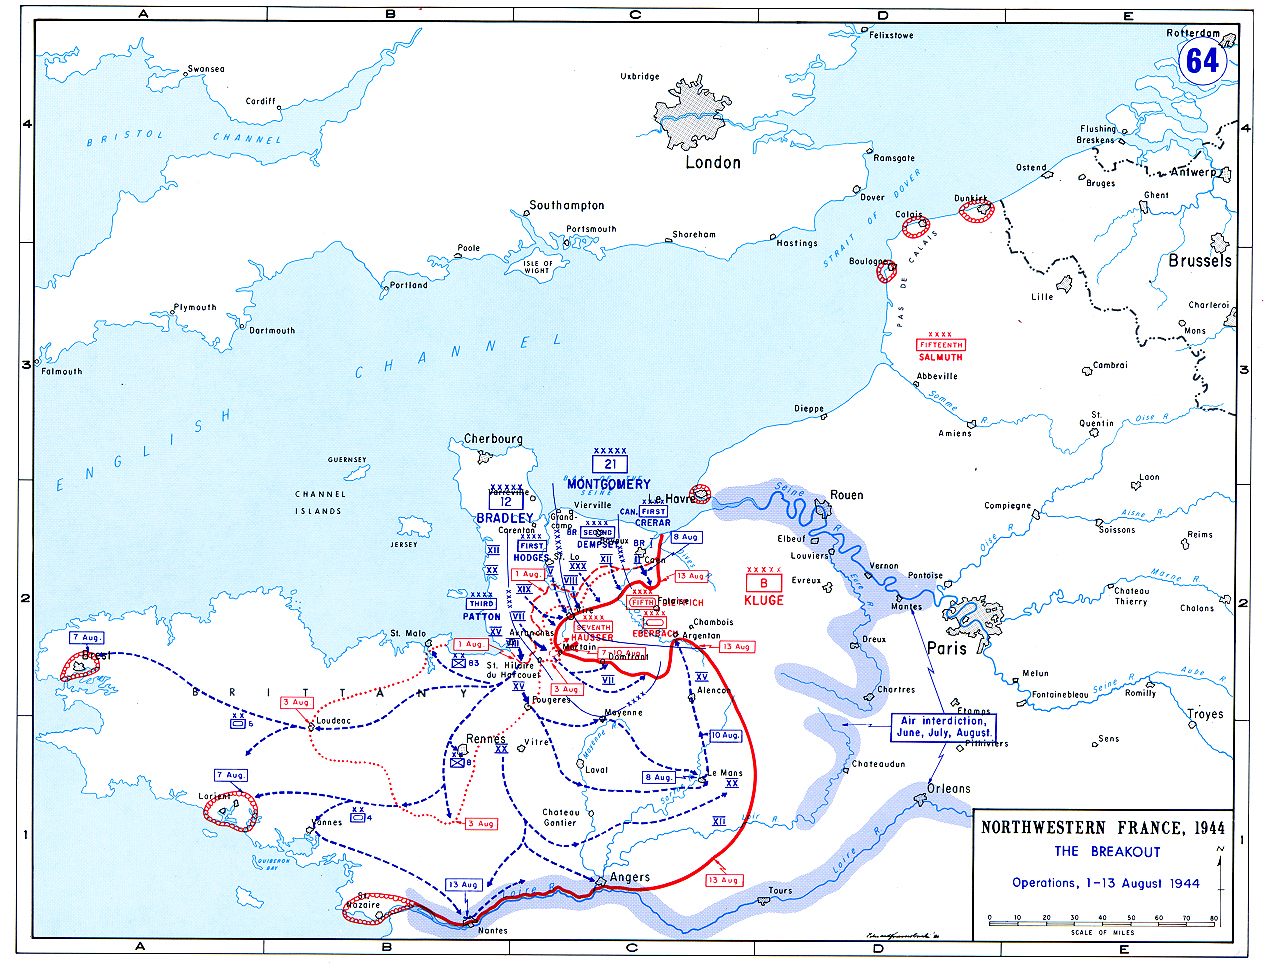 Northwestern France, 1944, 1-13 August